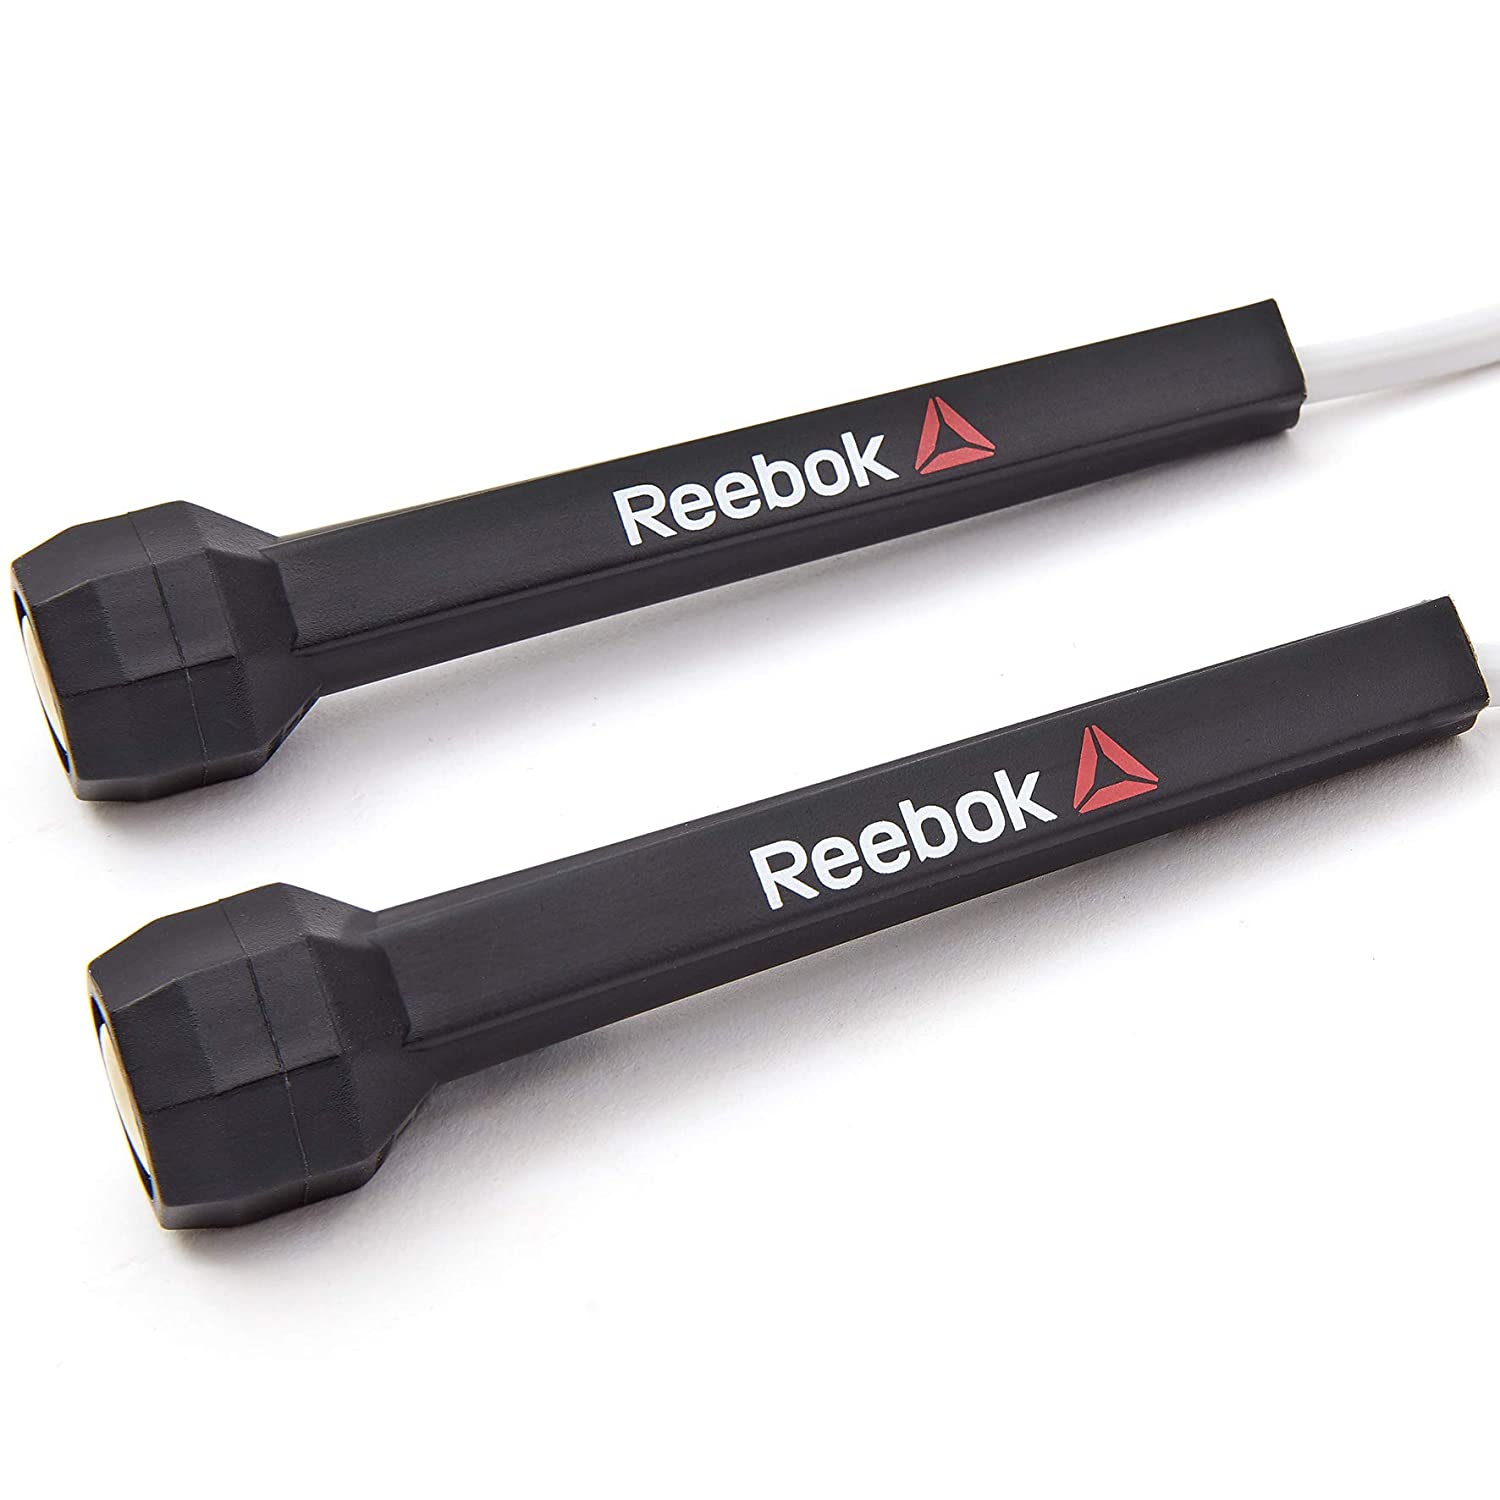 Reebok Skipping Rope - Black/Grey - Best Price online Prokicksports.com